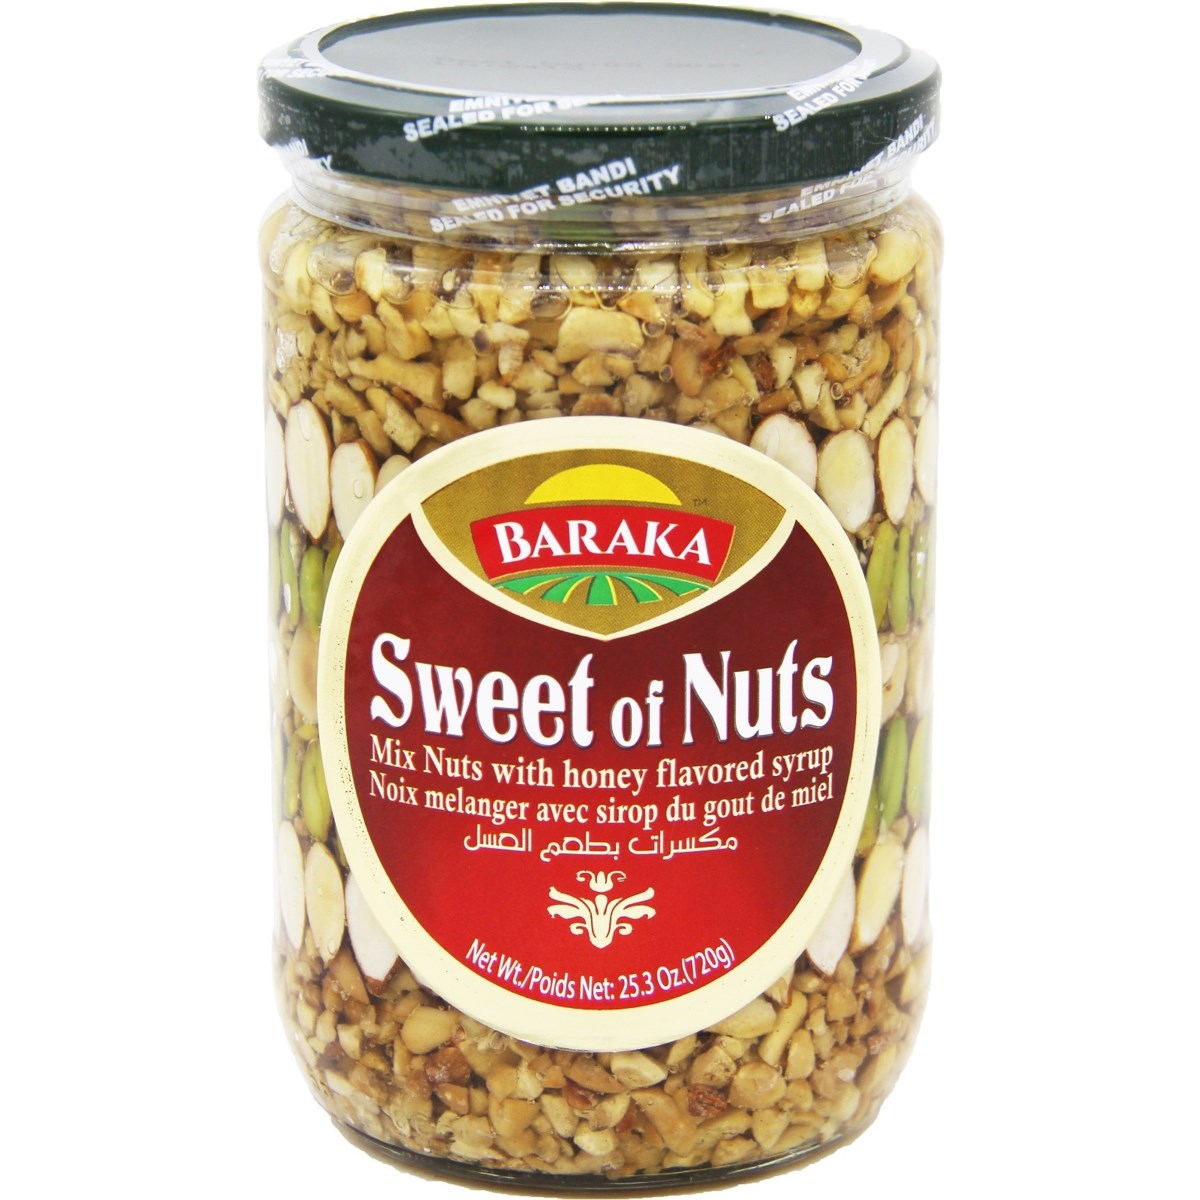 Honey flavored Sweet of Nuts "Baraka" 720g * 12